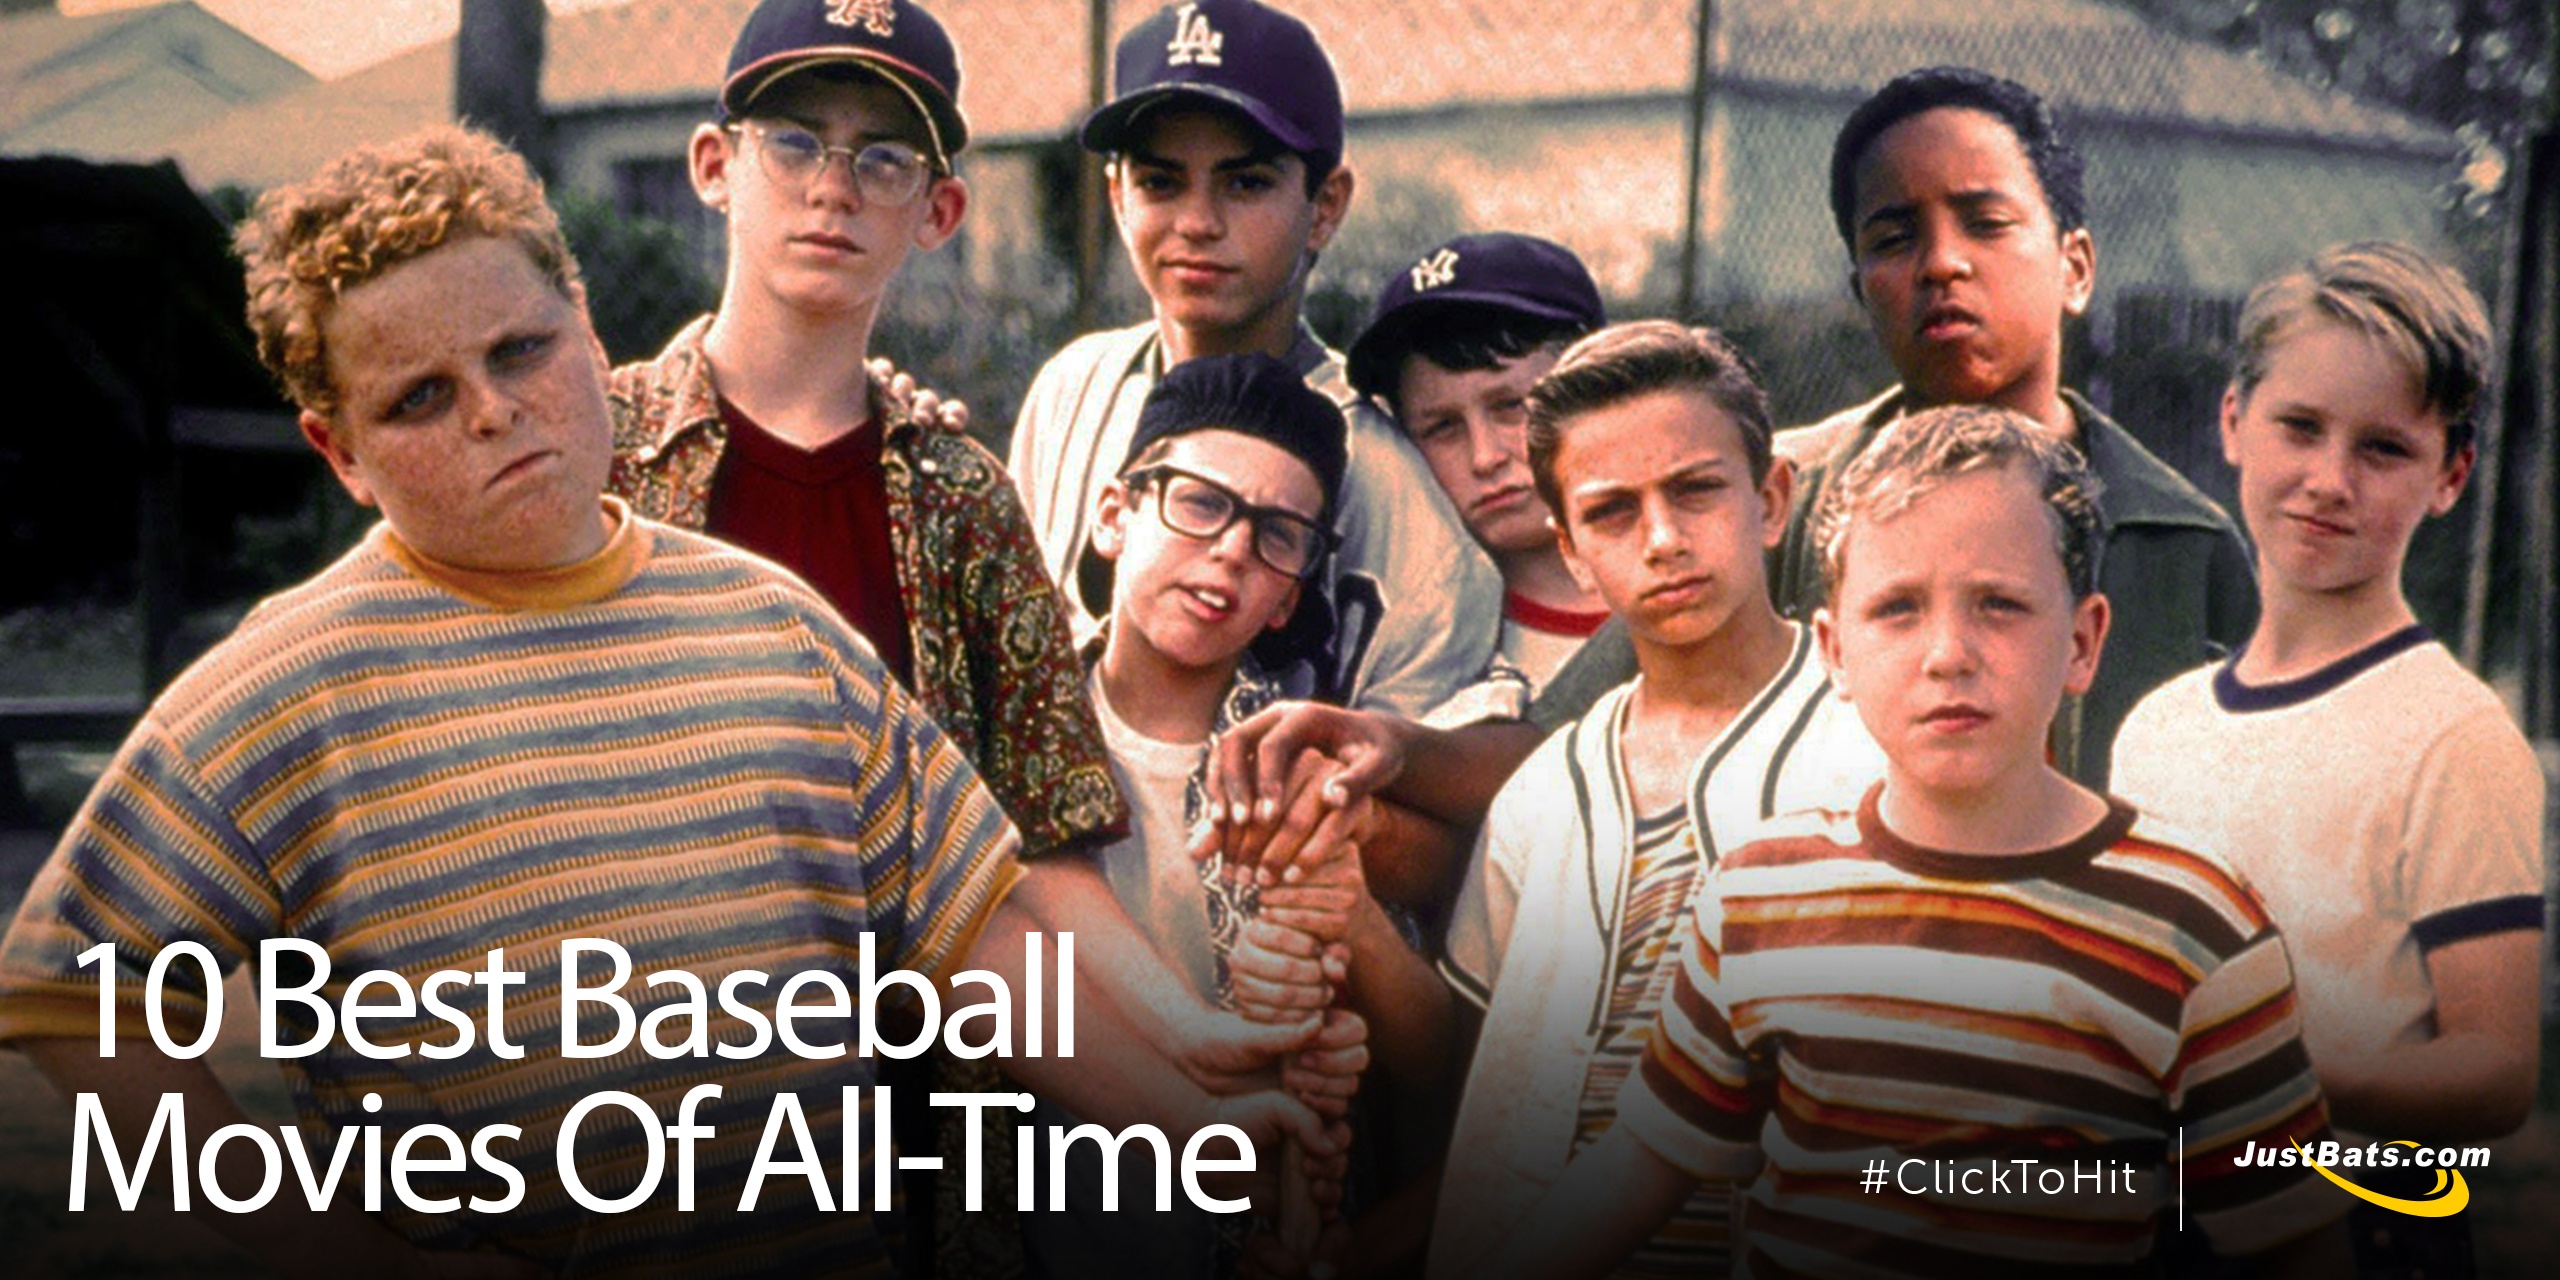 10 Best Baseball Movies - Blog.jpg